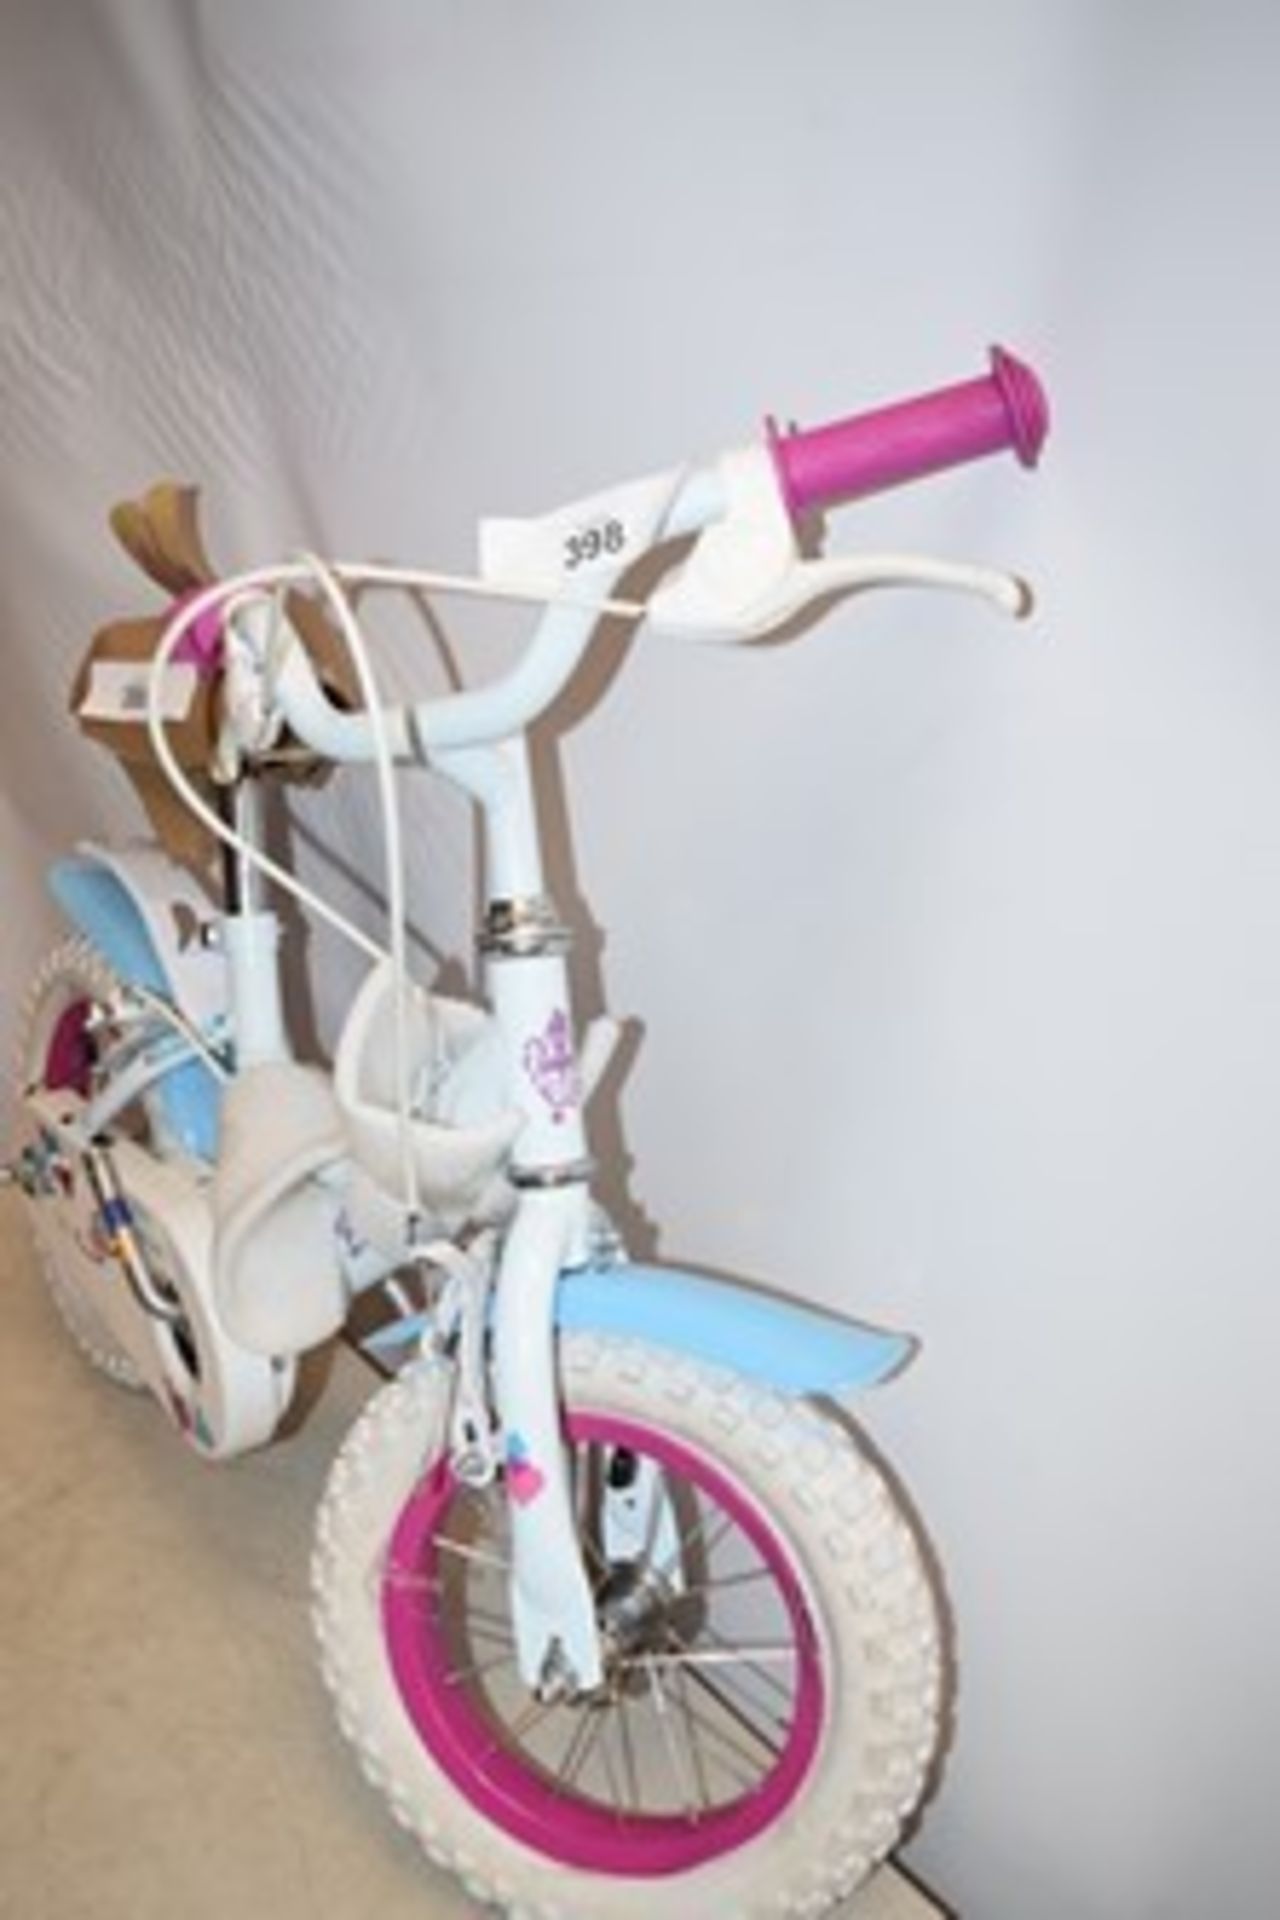 1 x Dawes Princess girls bike - New, slightly dirty due to storage (ES13) - Image 2 of 3